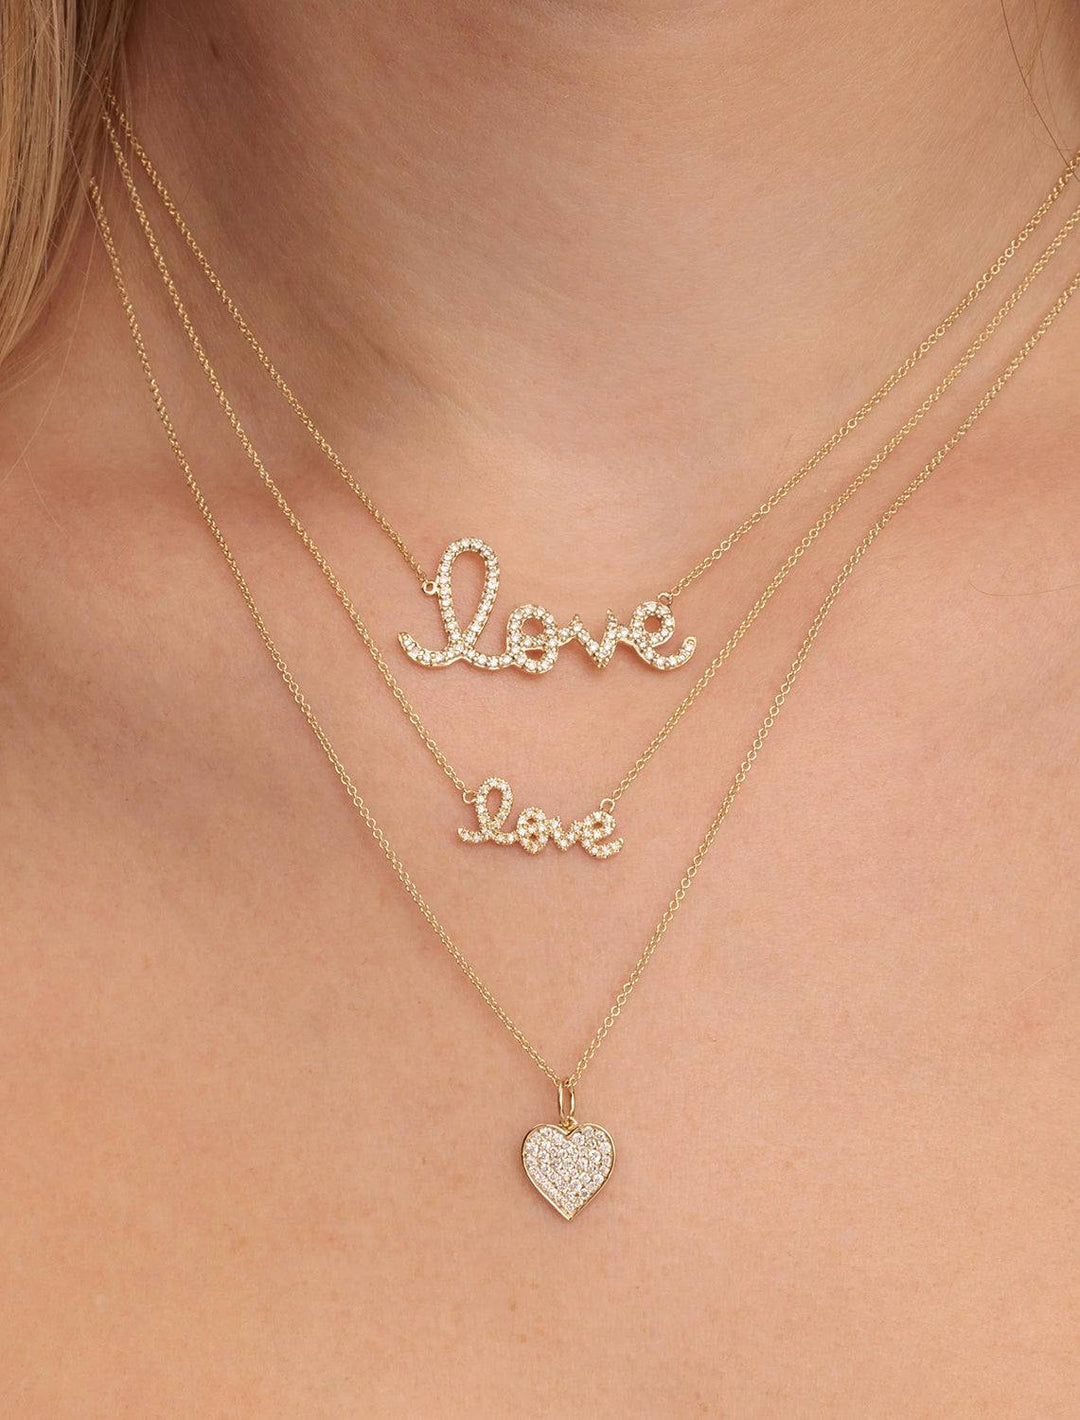 Sydney Evan's love script necklace.